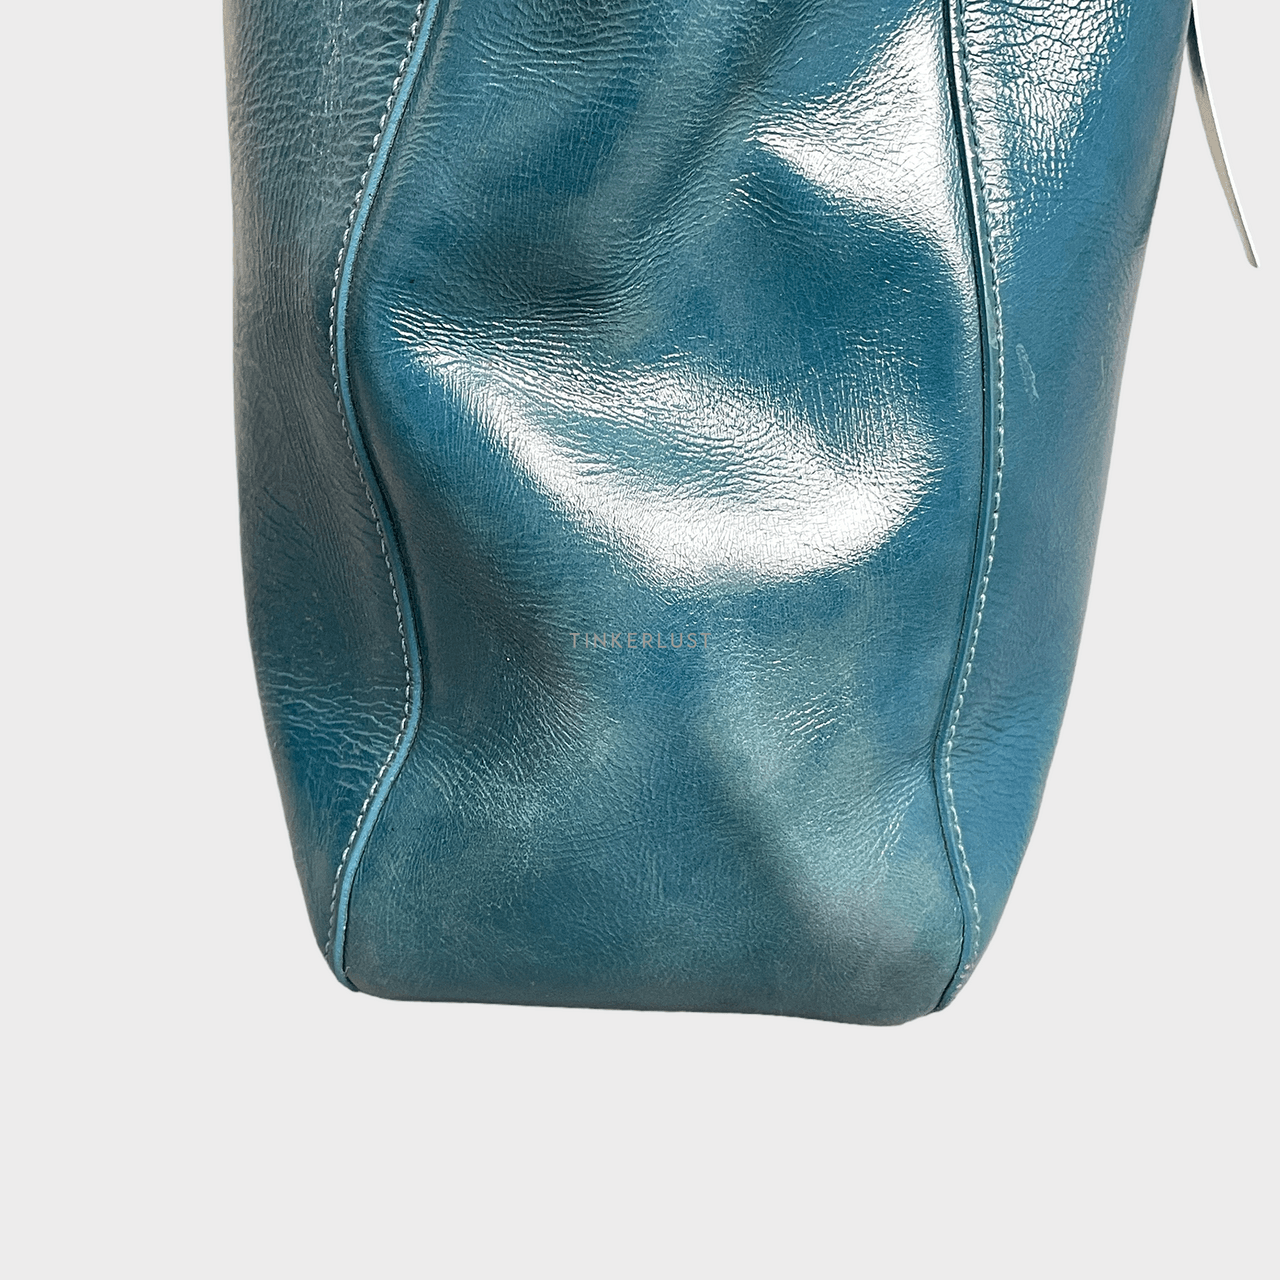 Jil Sander Blue Tote Bag